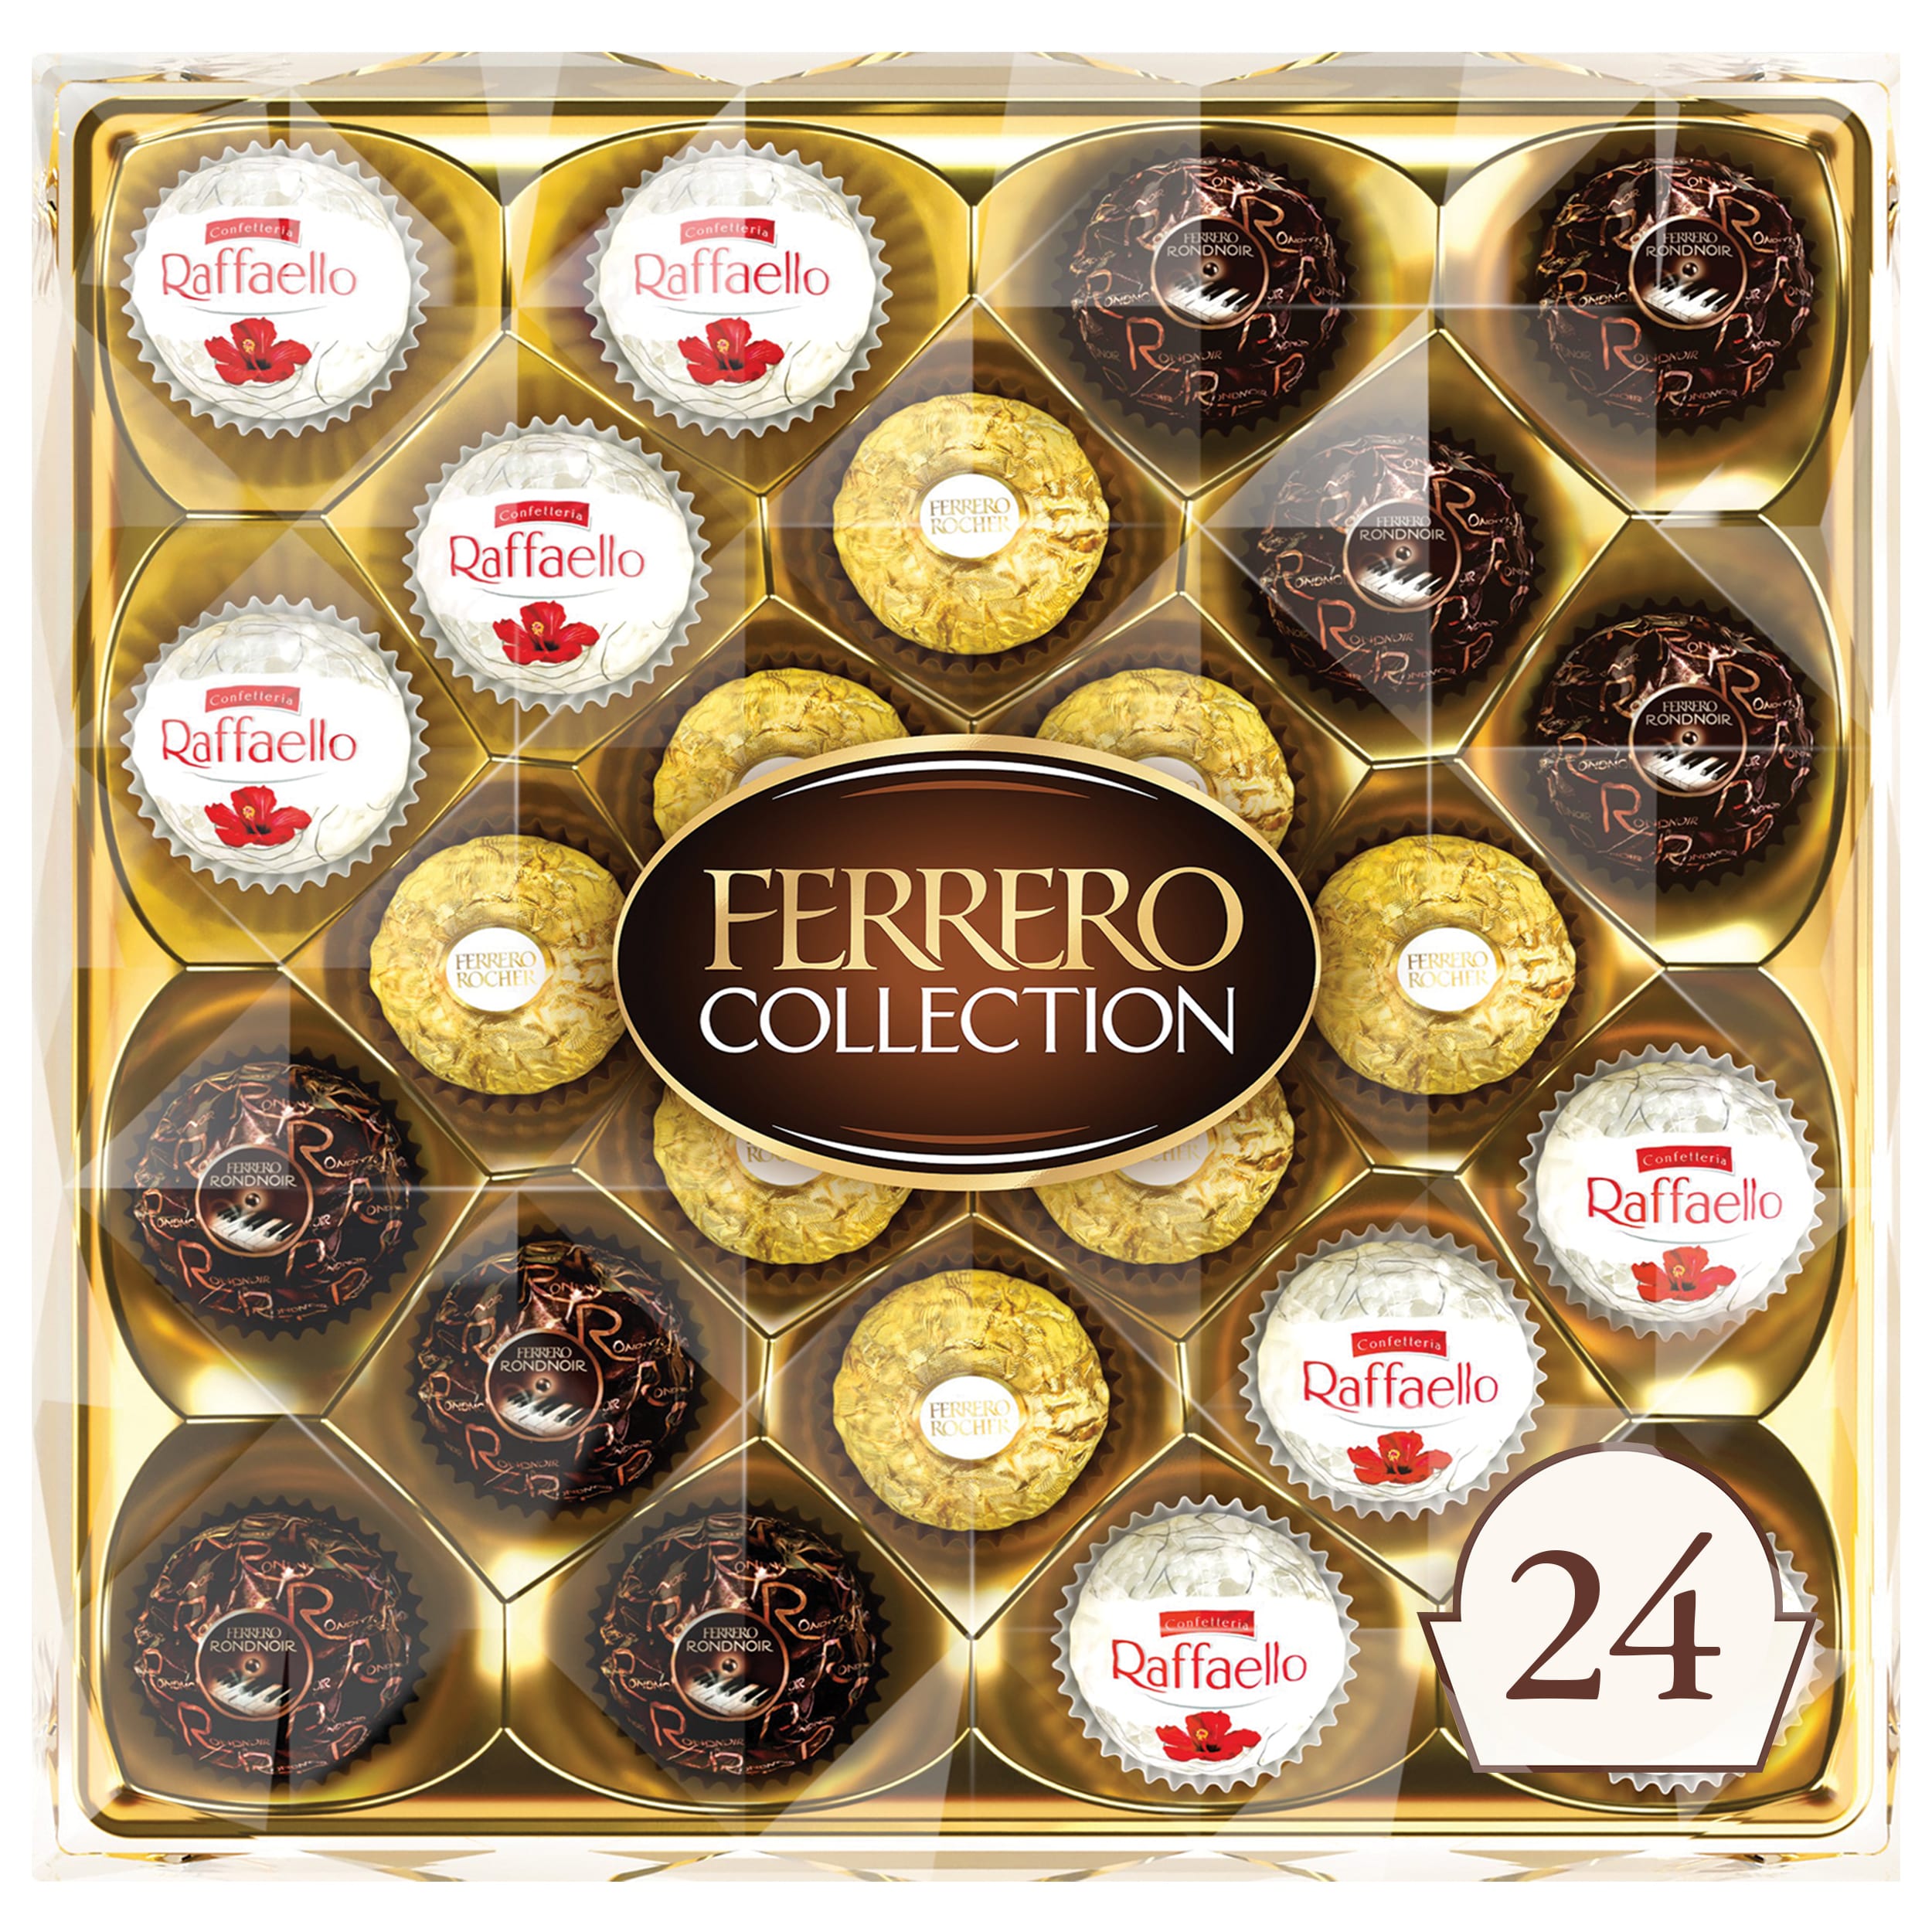 Ferrero Collection Premium Assorted Hazelnut Milk And Dark Chocolate And Coconut, 24 Count - image 1 of 10